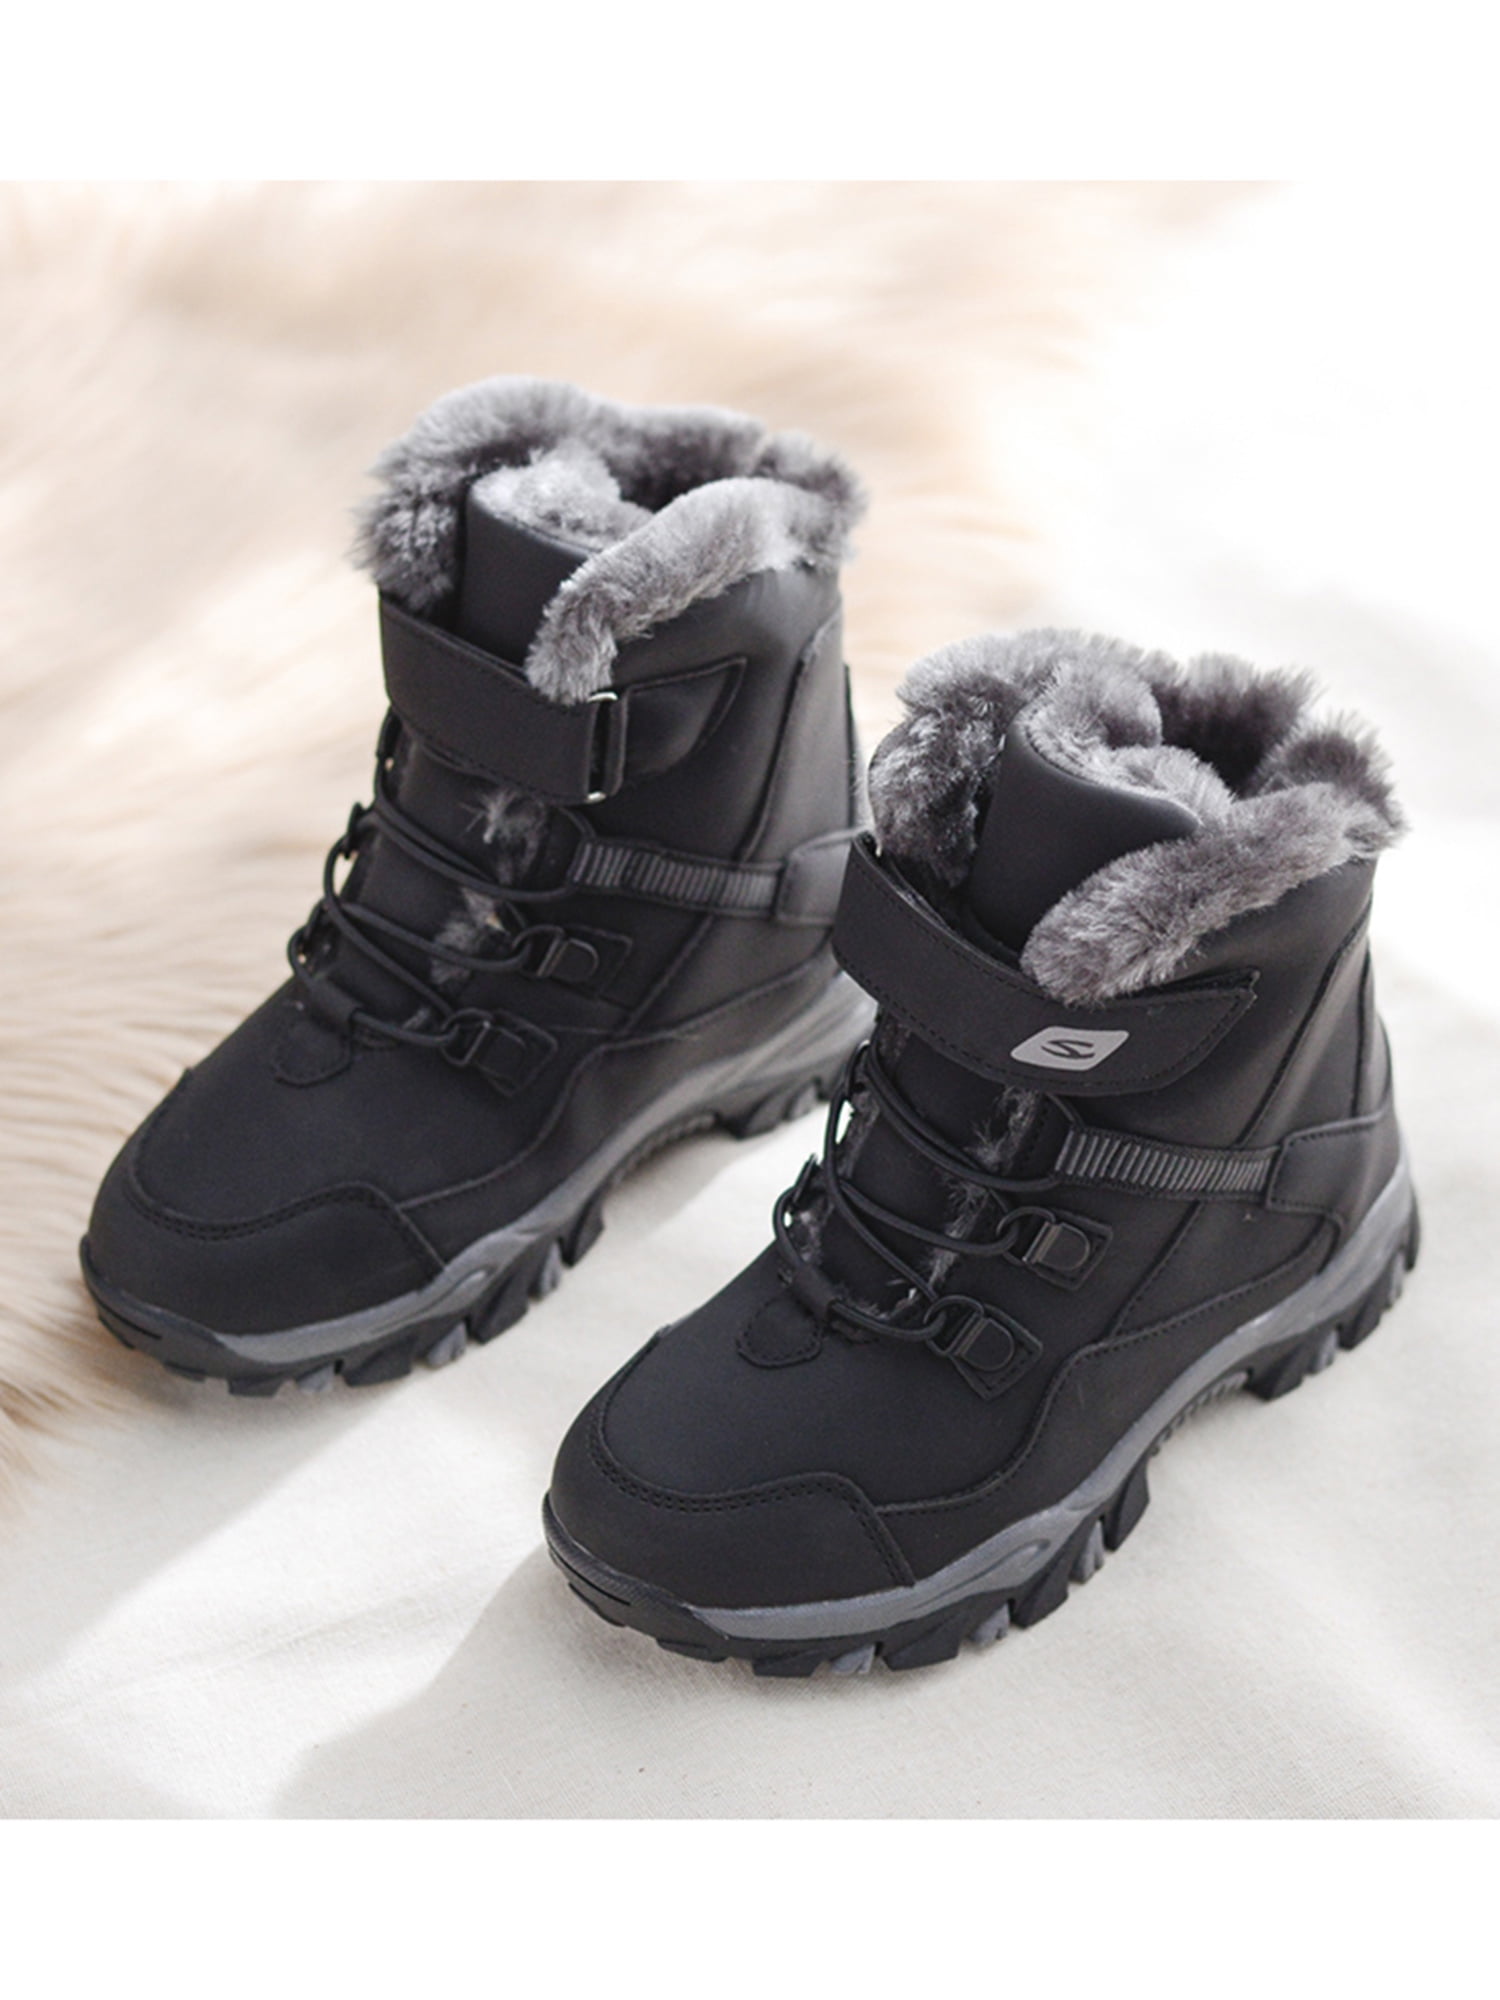 Warm Boys Snow Boots Fur Lined Waterproof Children’s Winter Boots ...